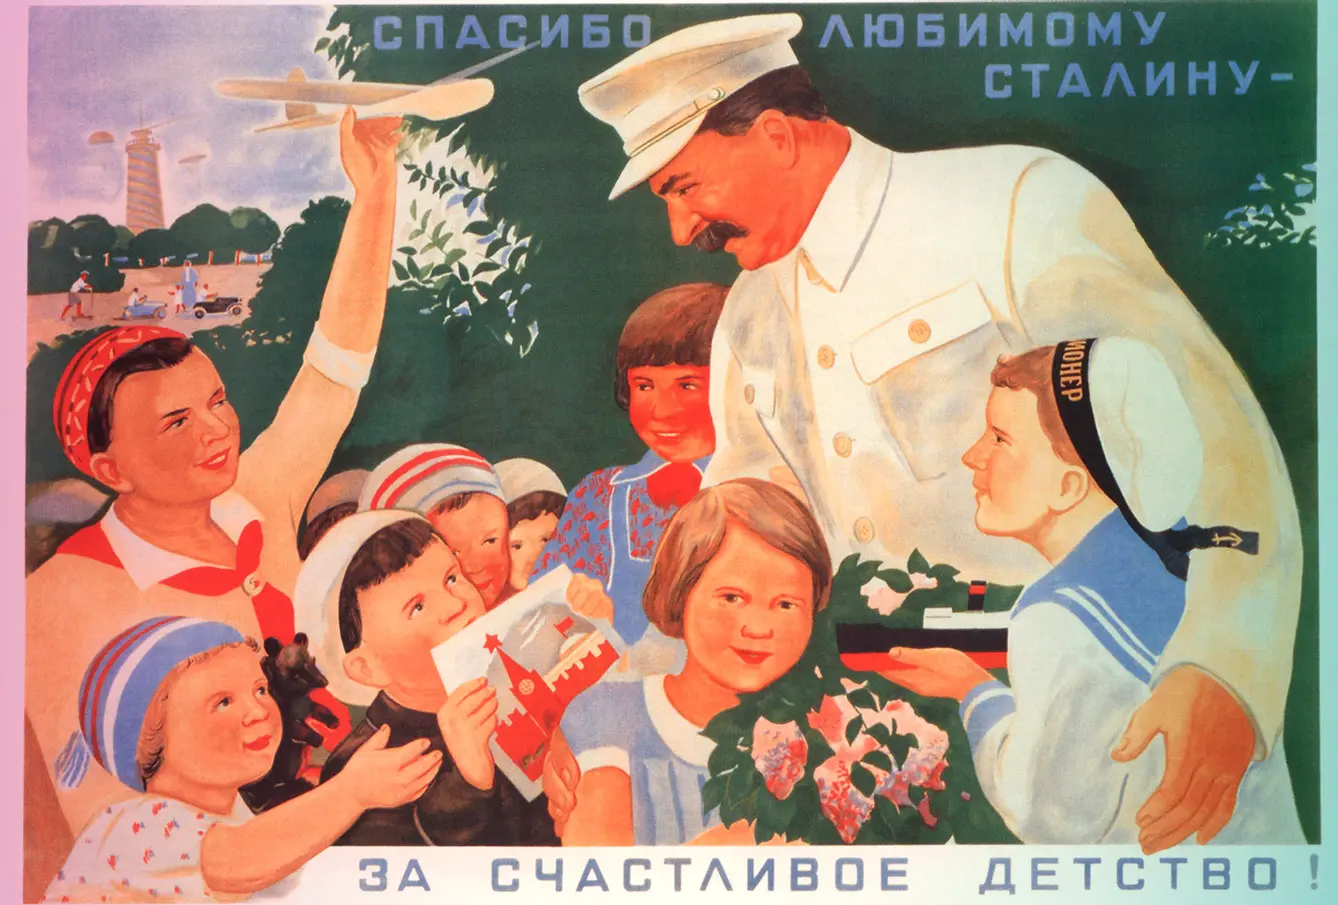 propaganda poster with Stalin